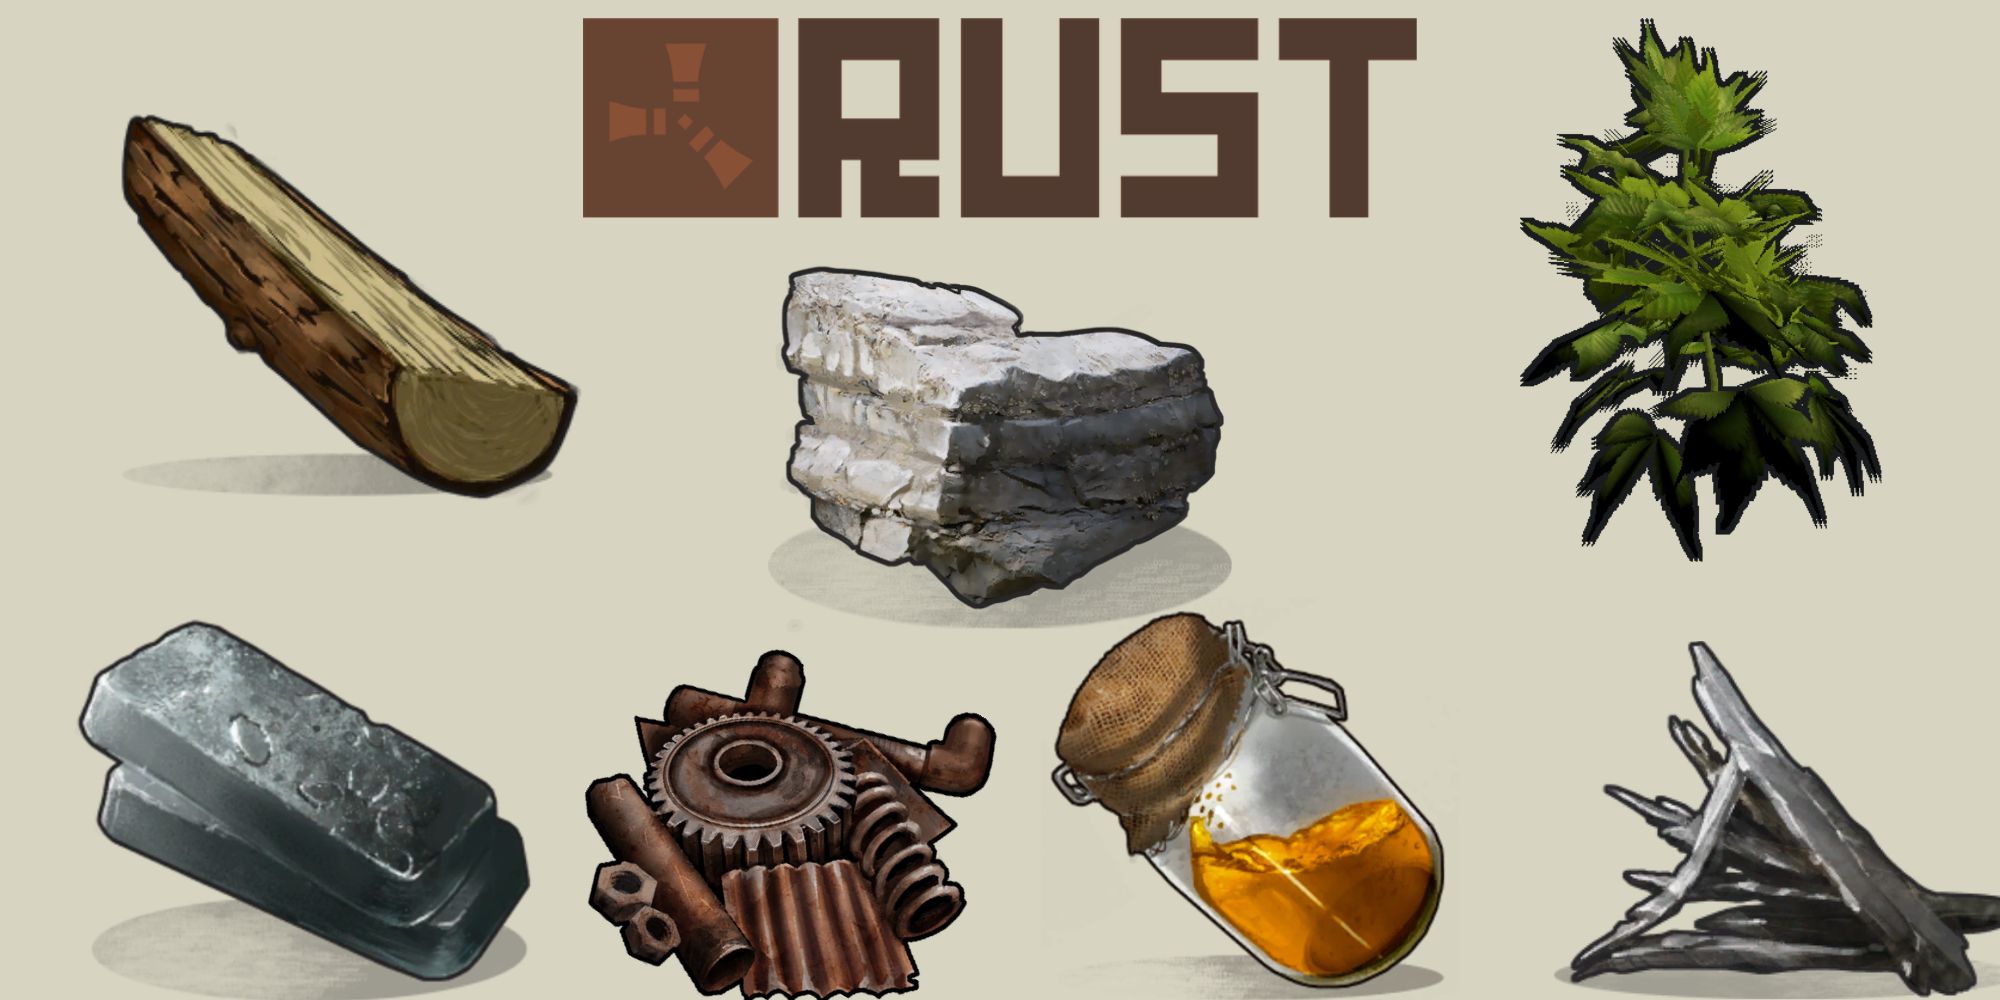 Rust Console Edition (영어)